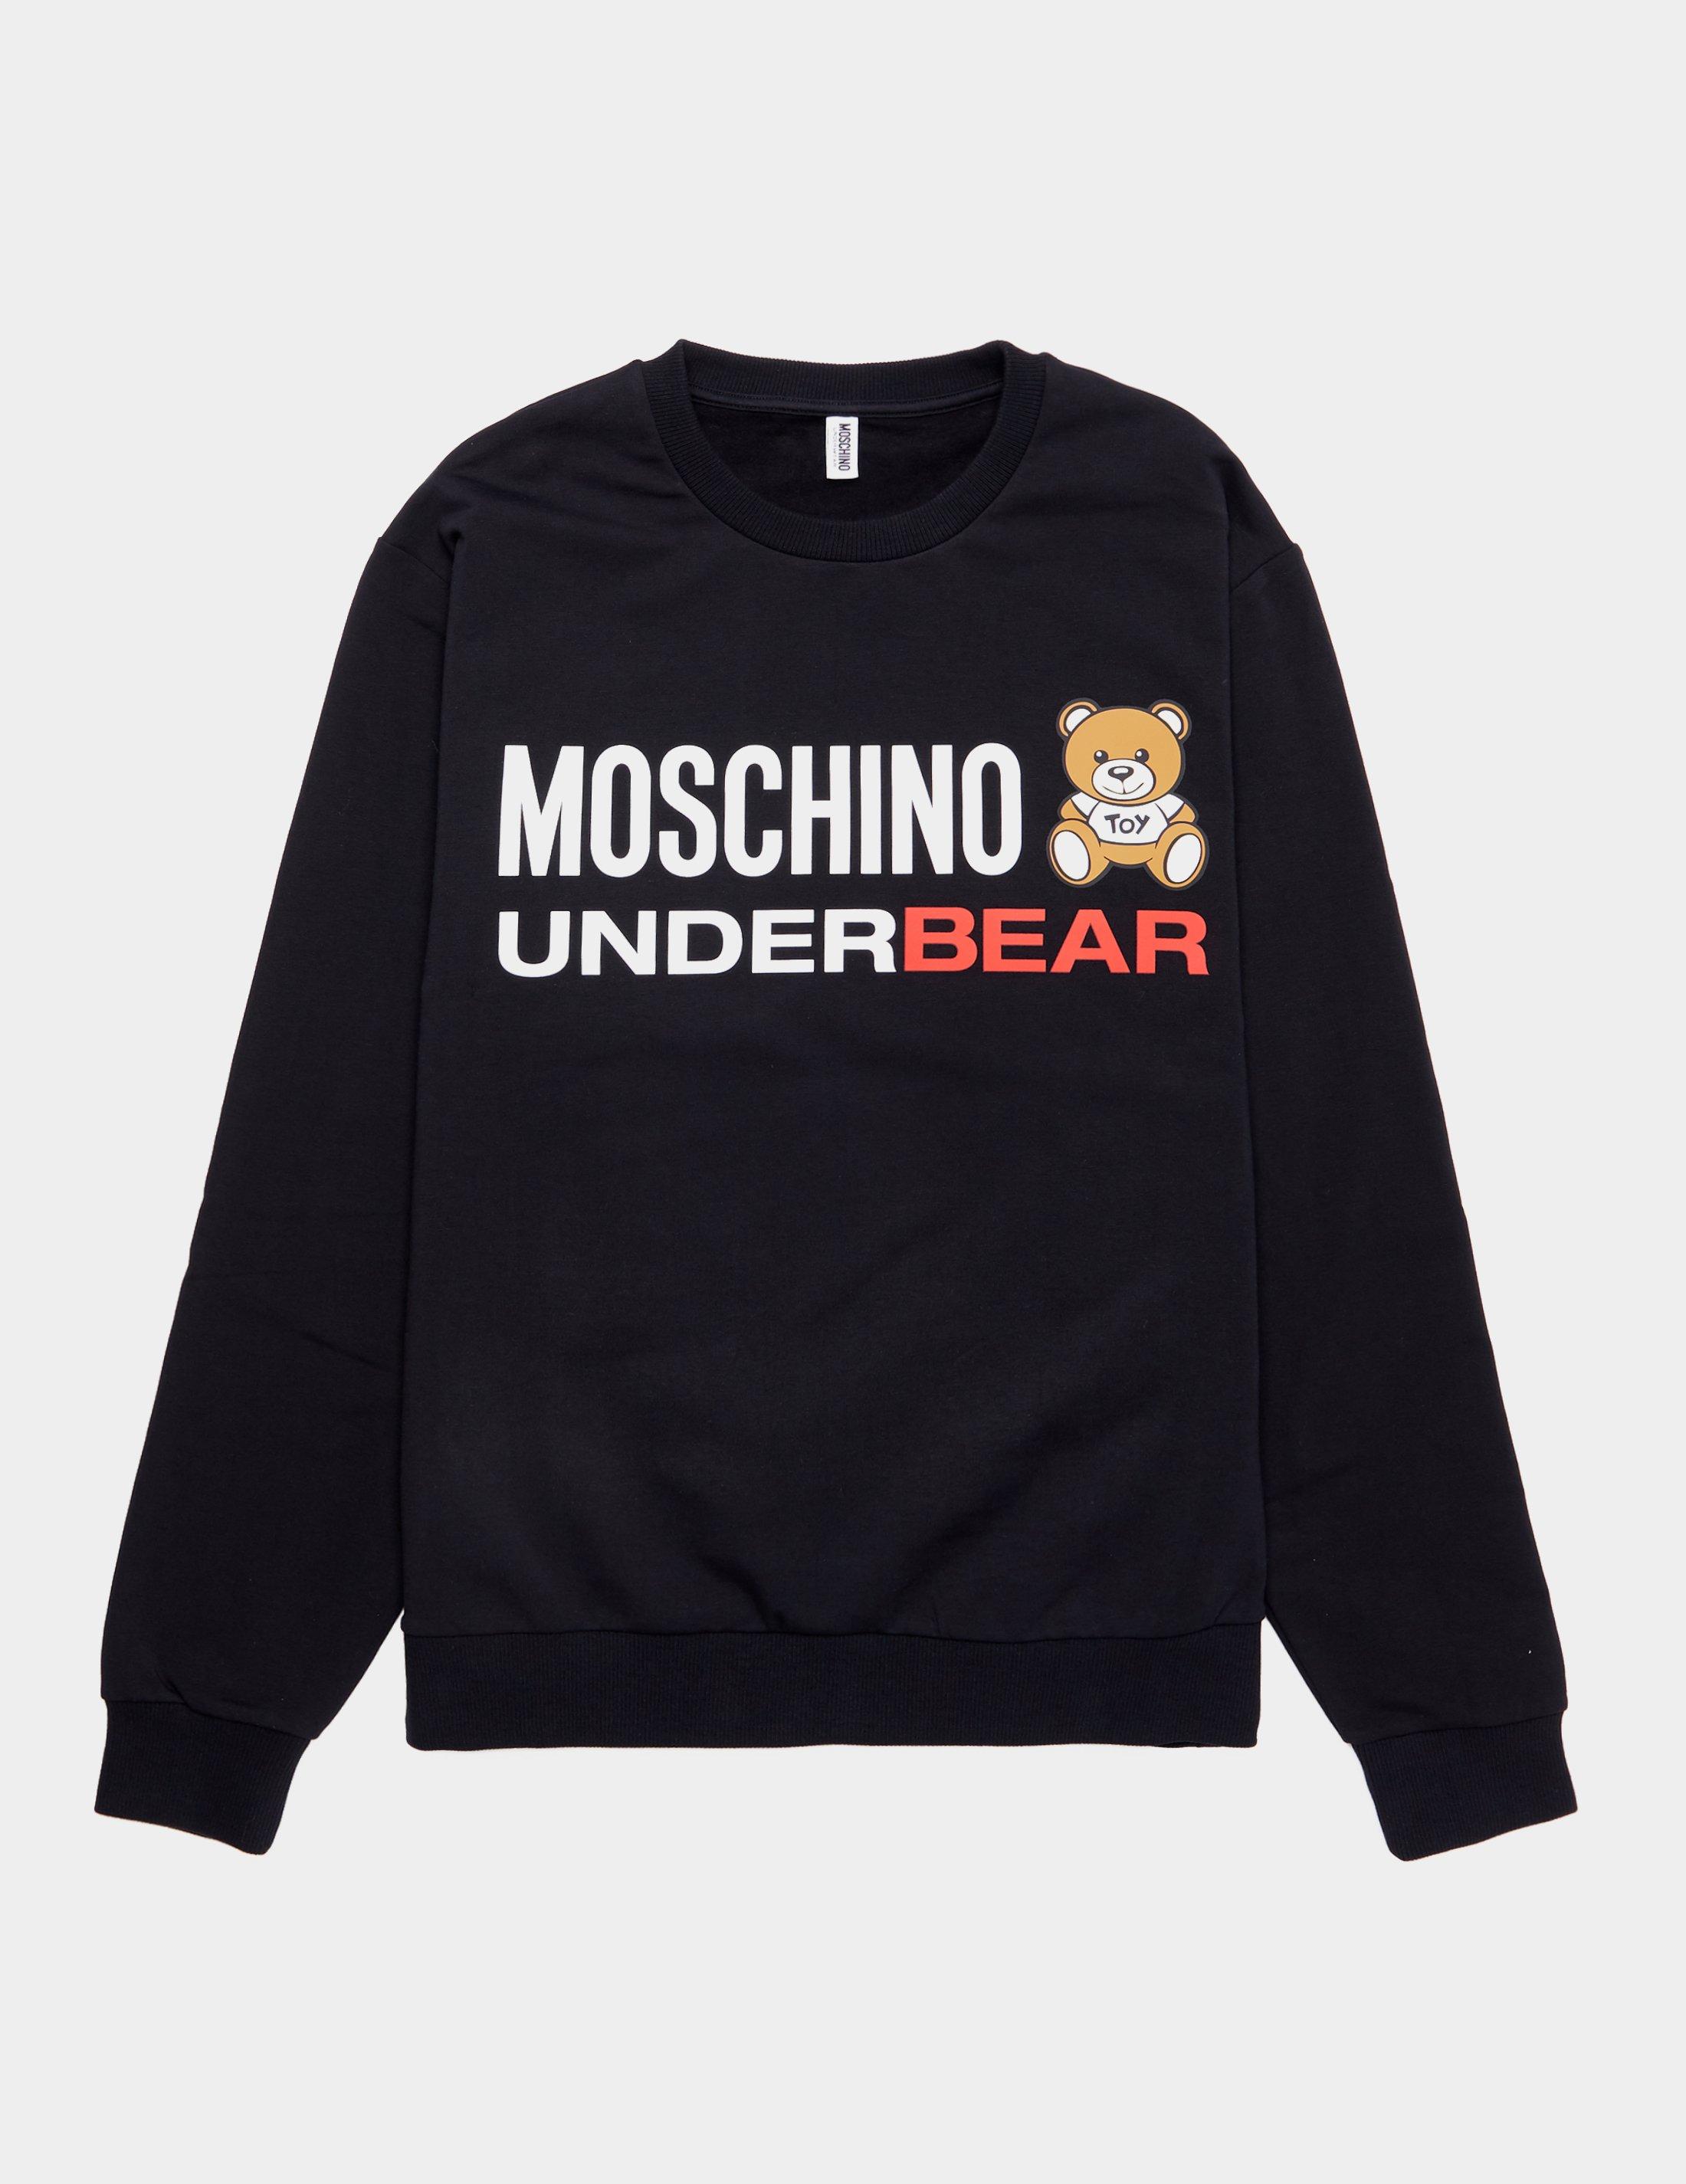 moschino underbear sweatshirt